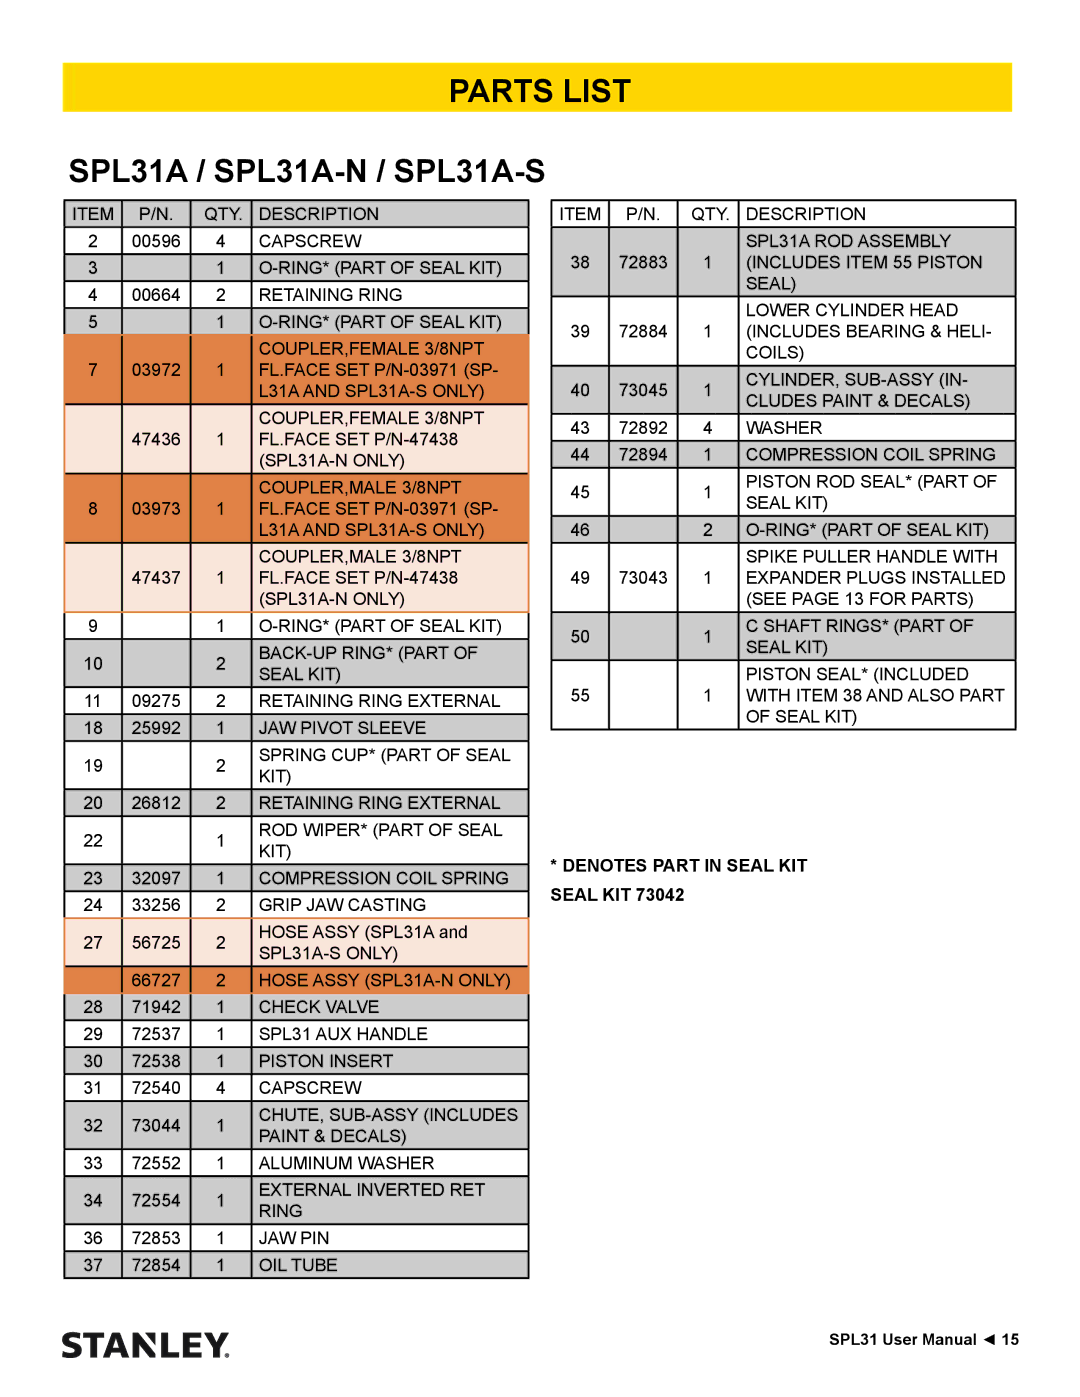 Stanley Black & Decker user manual Parts List, SPL31A / SPL31A-N / SPL31A-S 